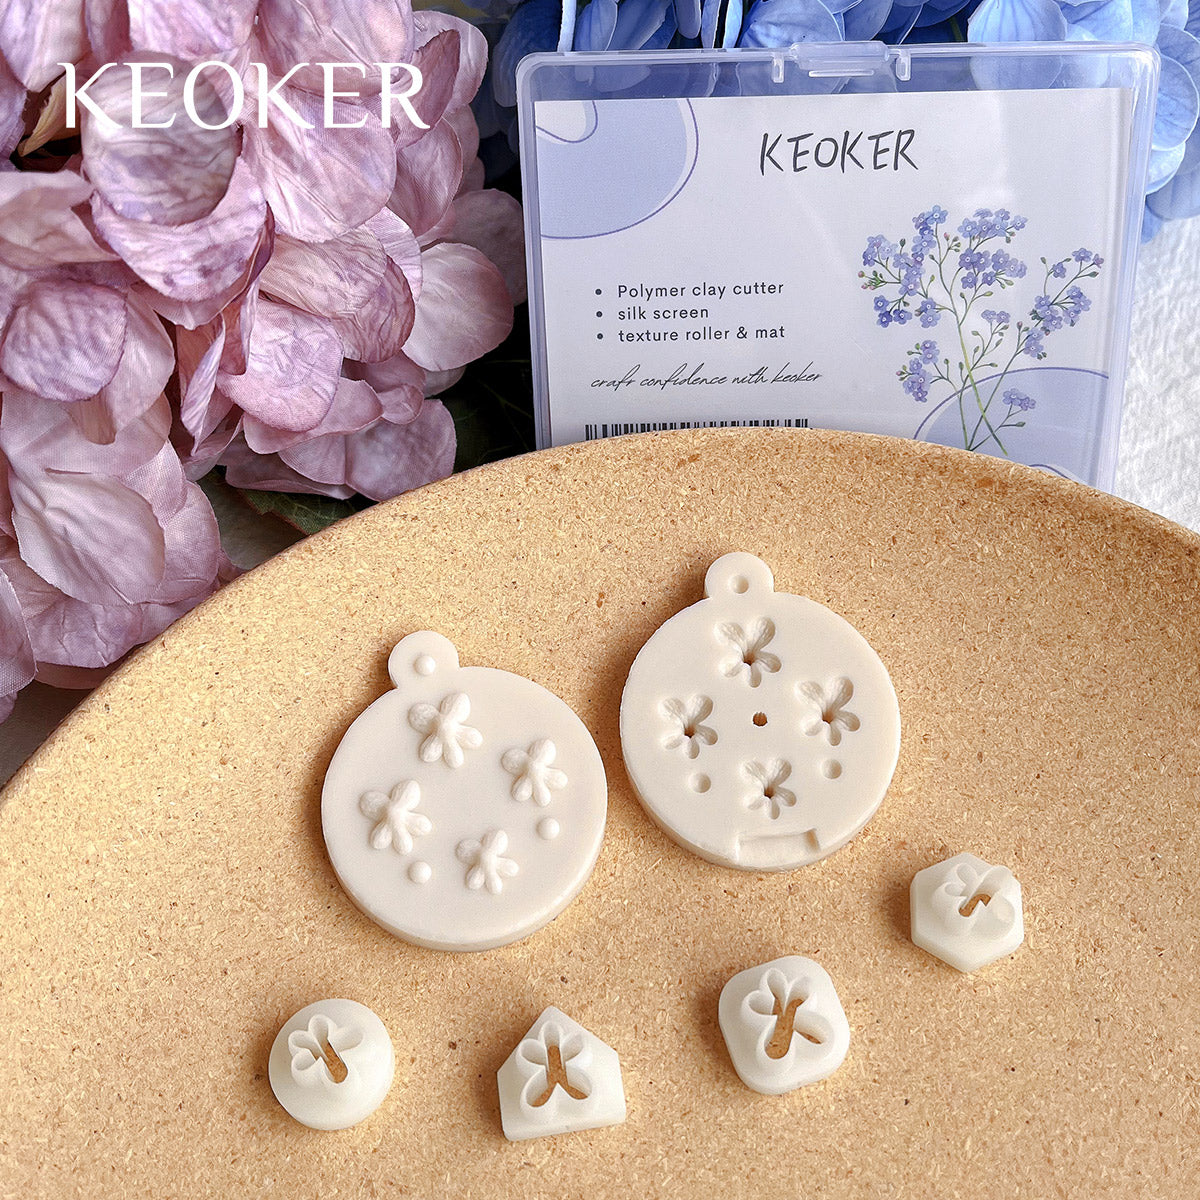 Keoker 15 Organic Shape Clay Cutters for Polymer Clay Jewelry, Polymer Clay  Cutters for Clay Earrings Jewerlry Making 